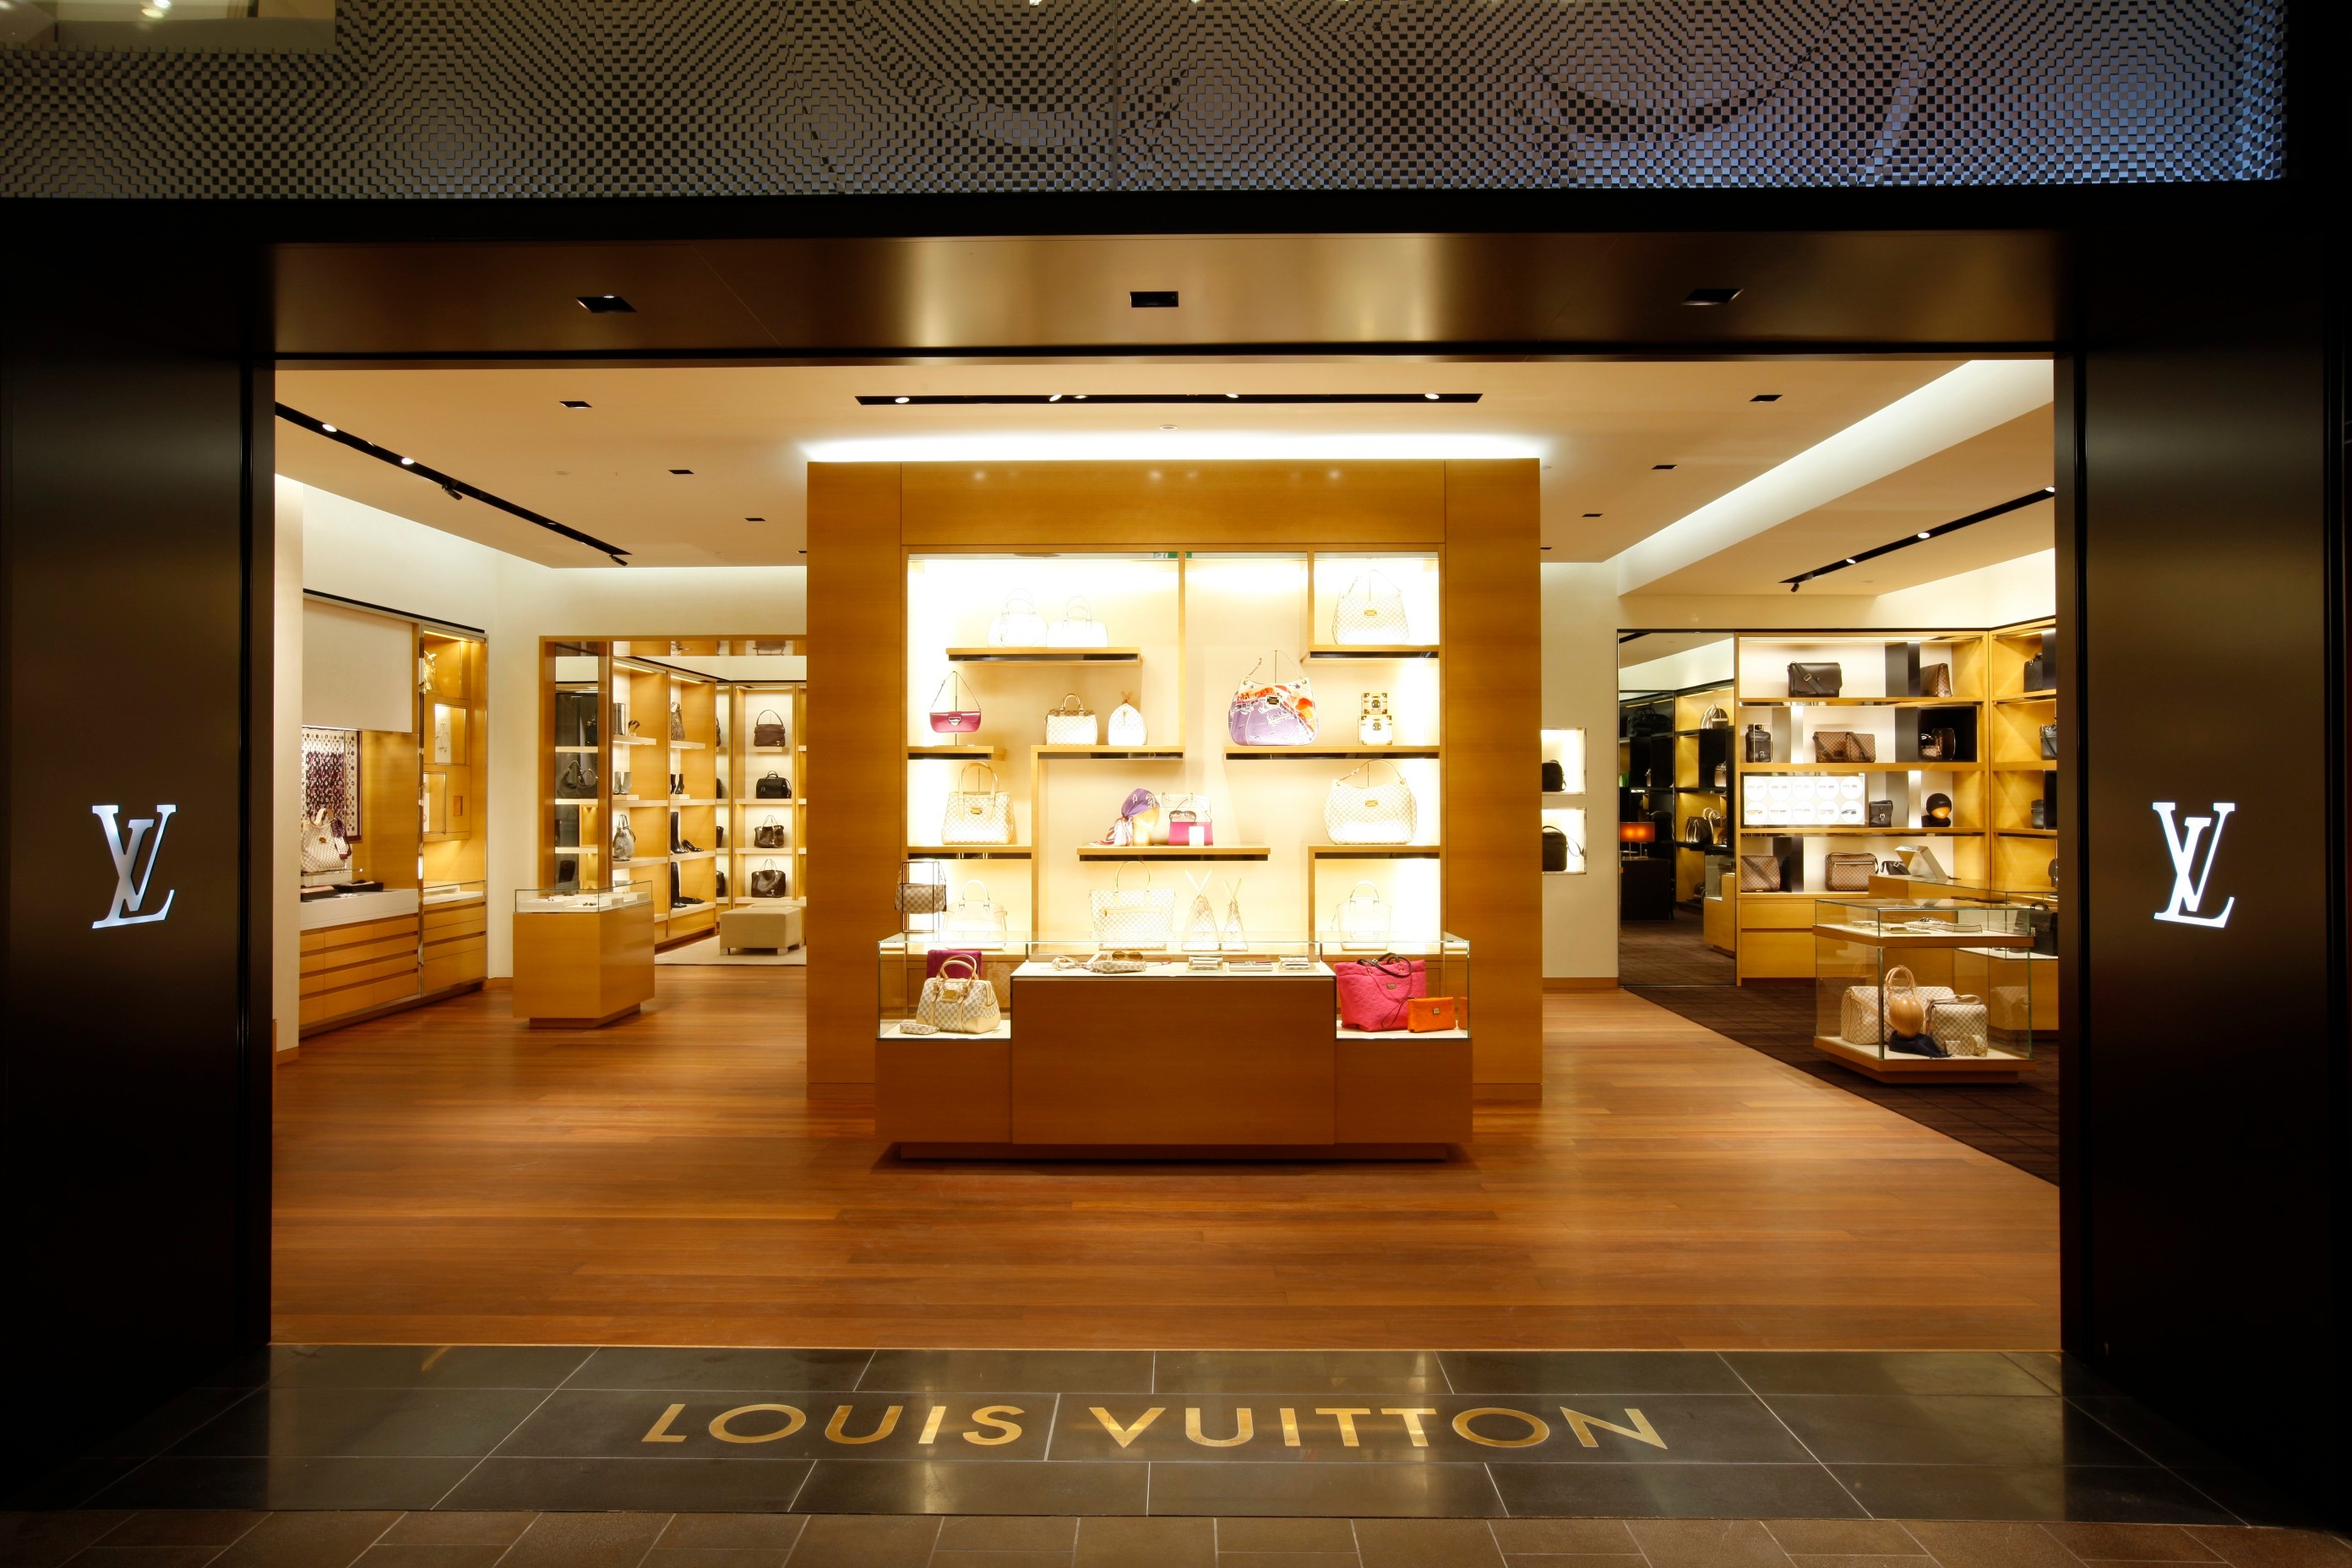 Louis Vuitton München Oberpollinger store, Germany